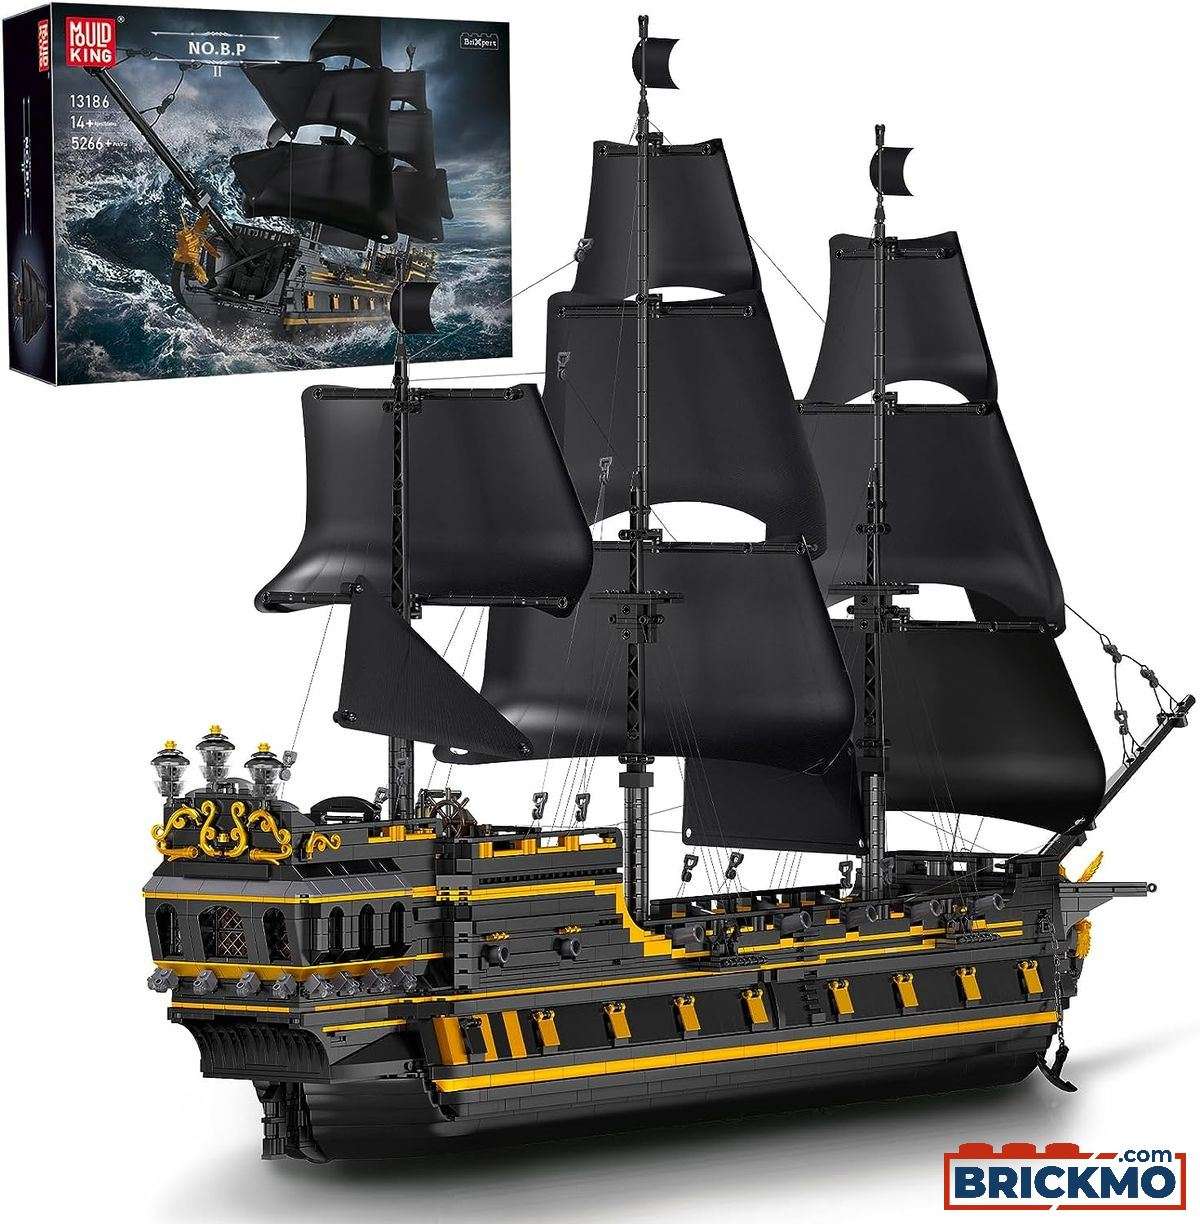 Mould King Black Pearl Nave Pirata 13186